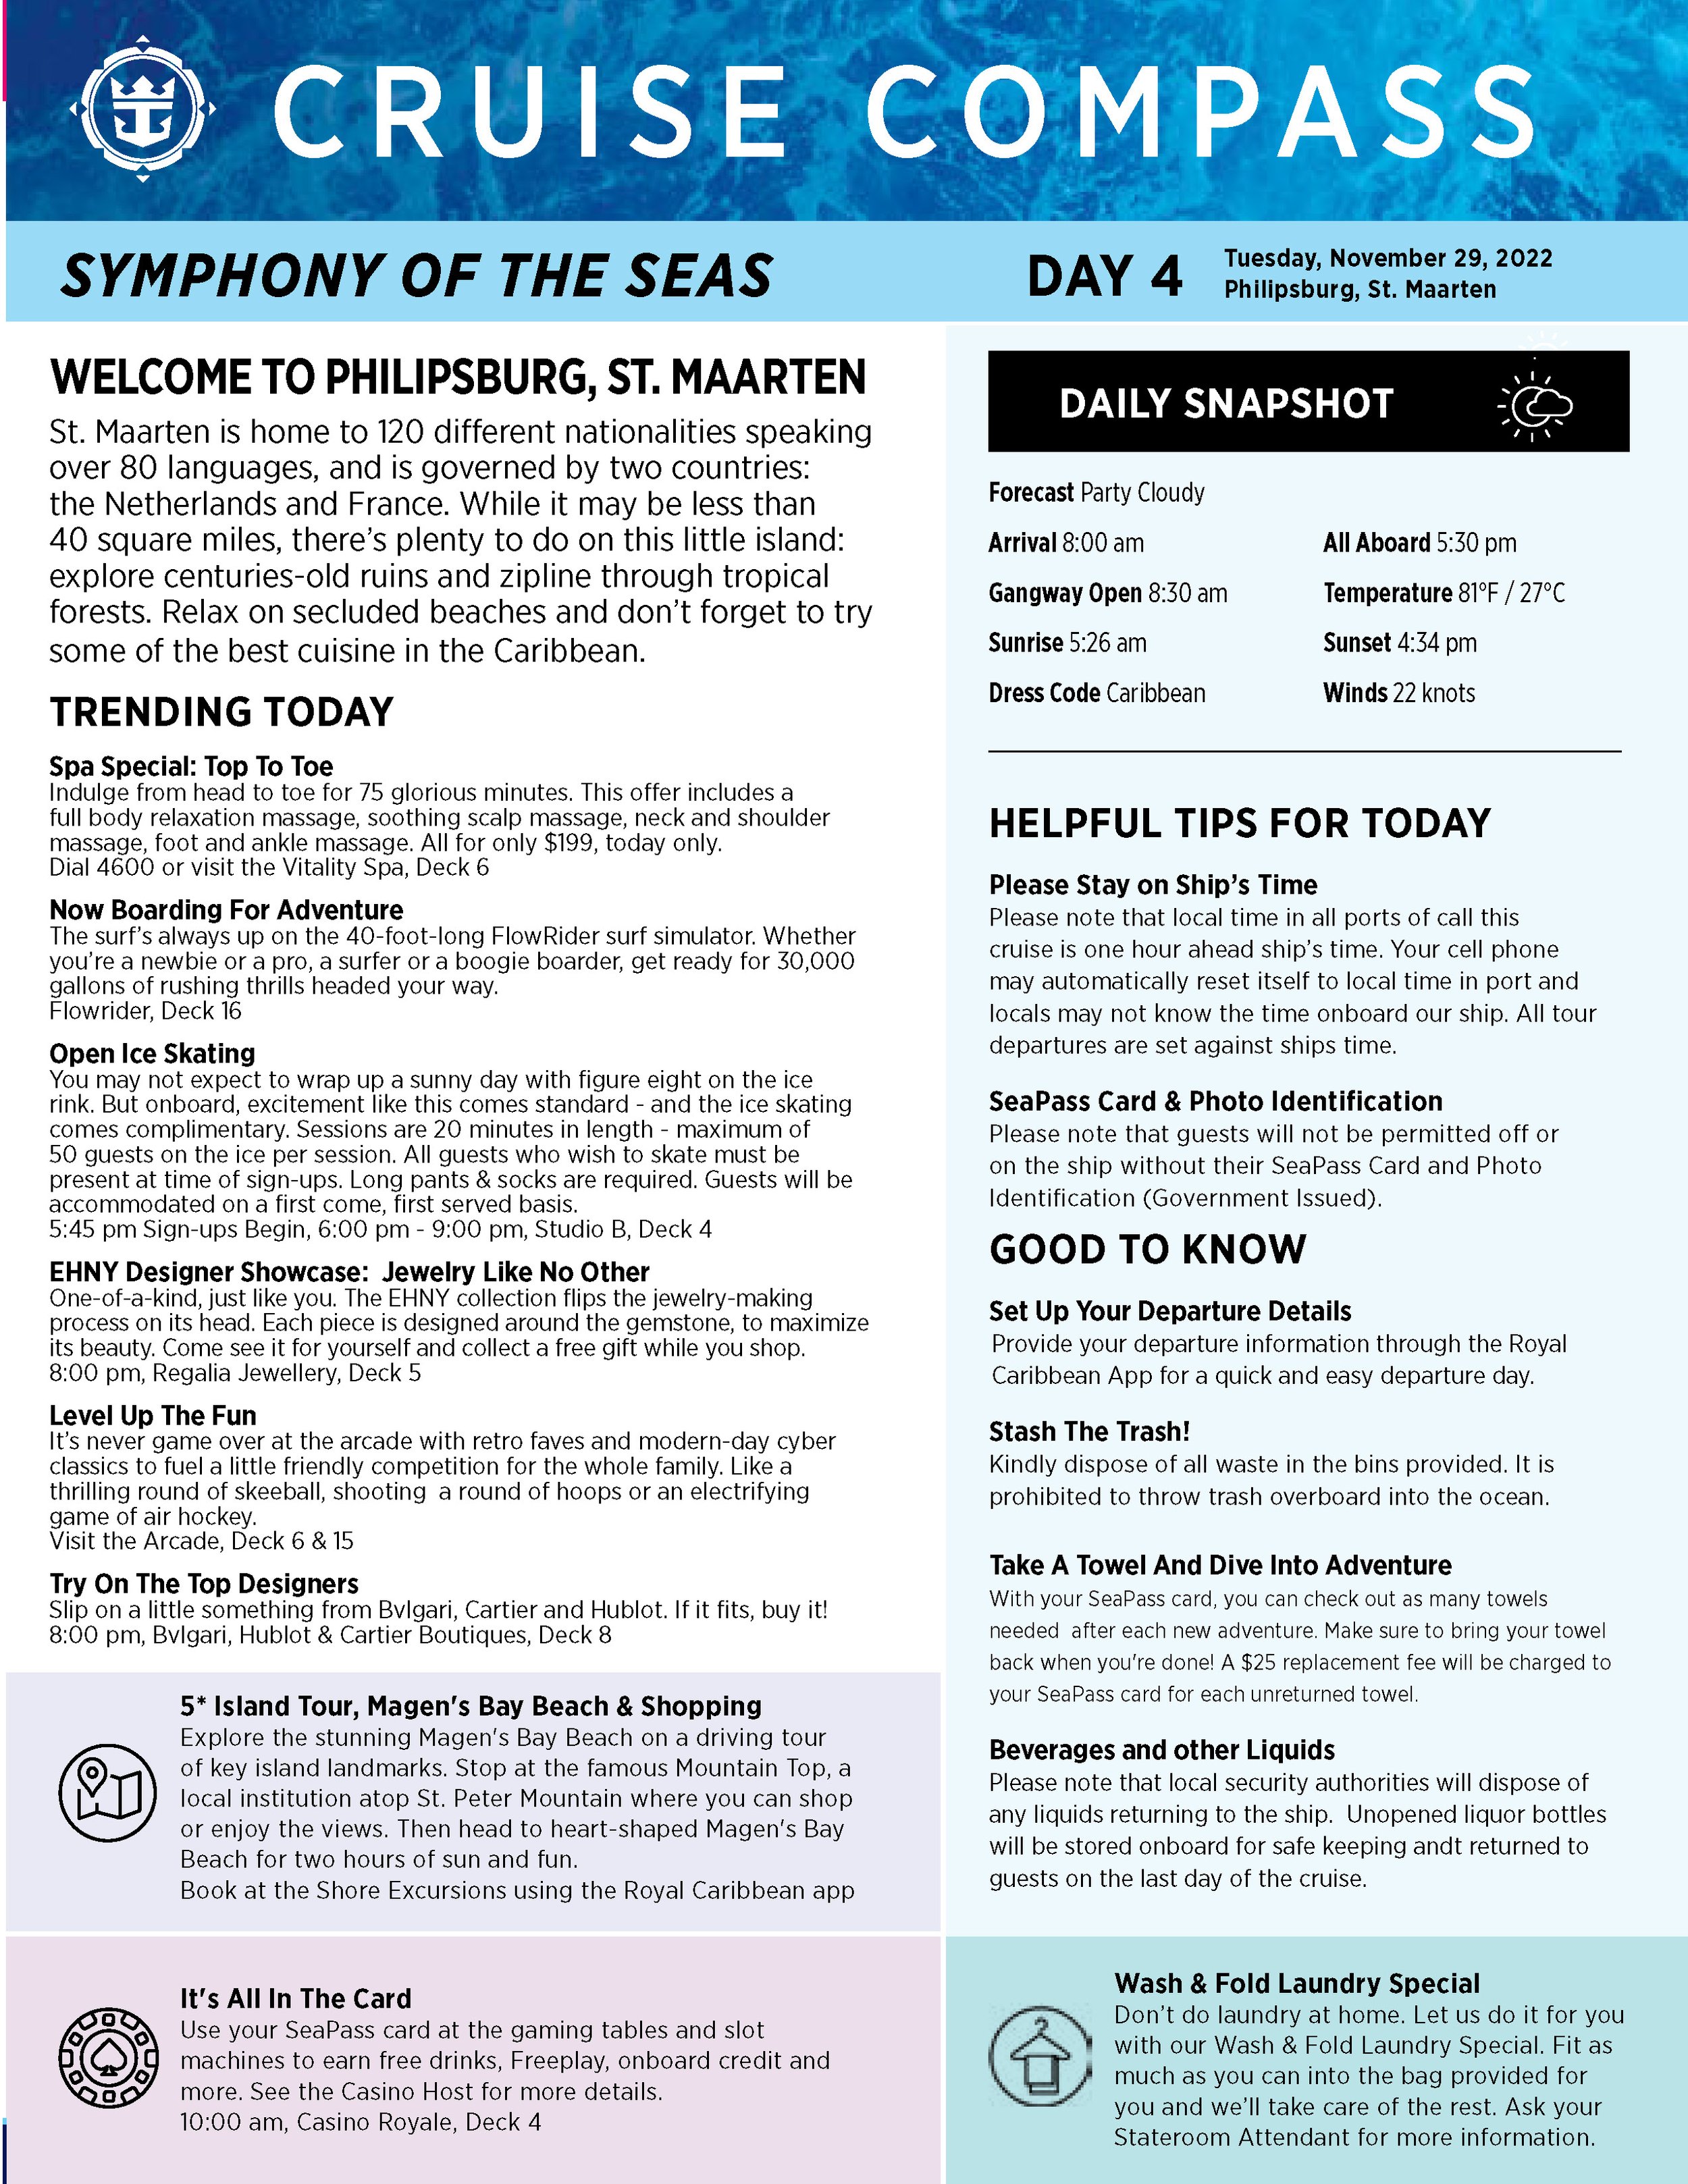 Nov 29, 2022 -Symphony of the Seas- Day04 -Philipsburg St Maarten, Netherlands Antilles - Page 01.jpg